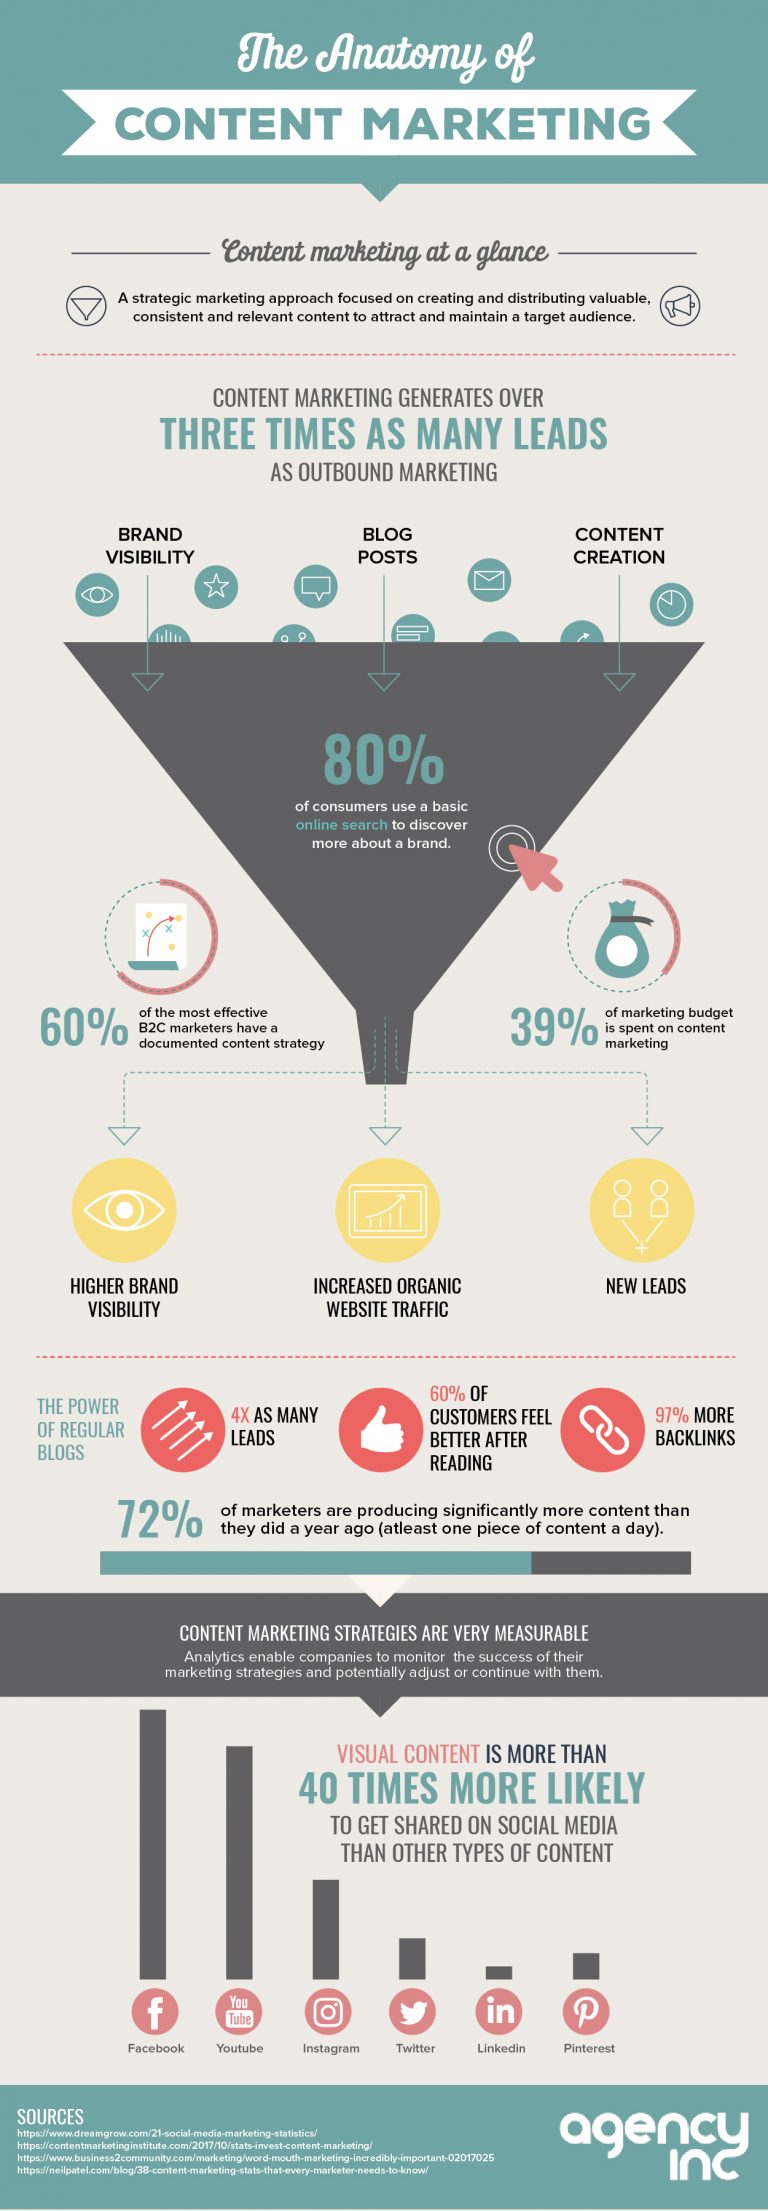 Content-marketing-infographic-plaza